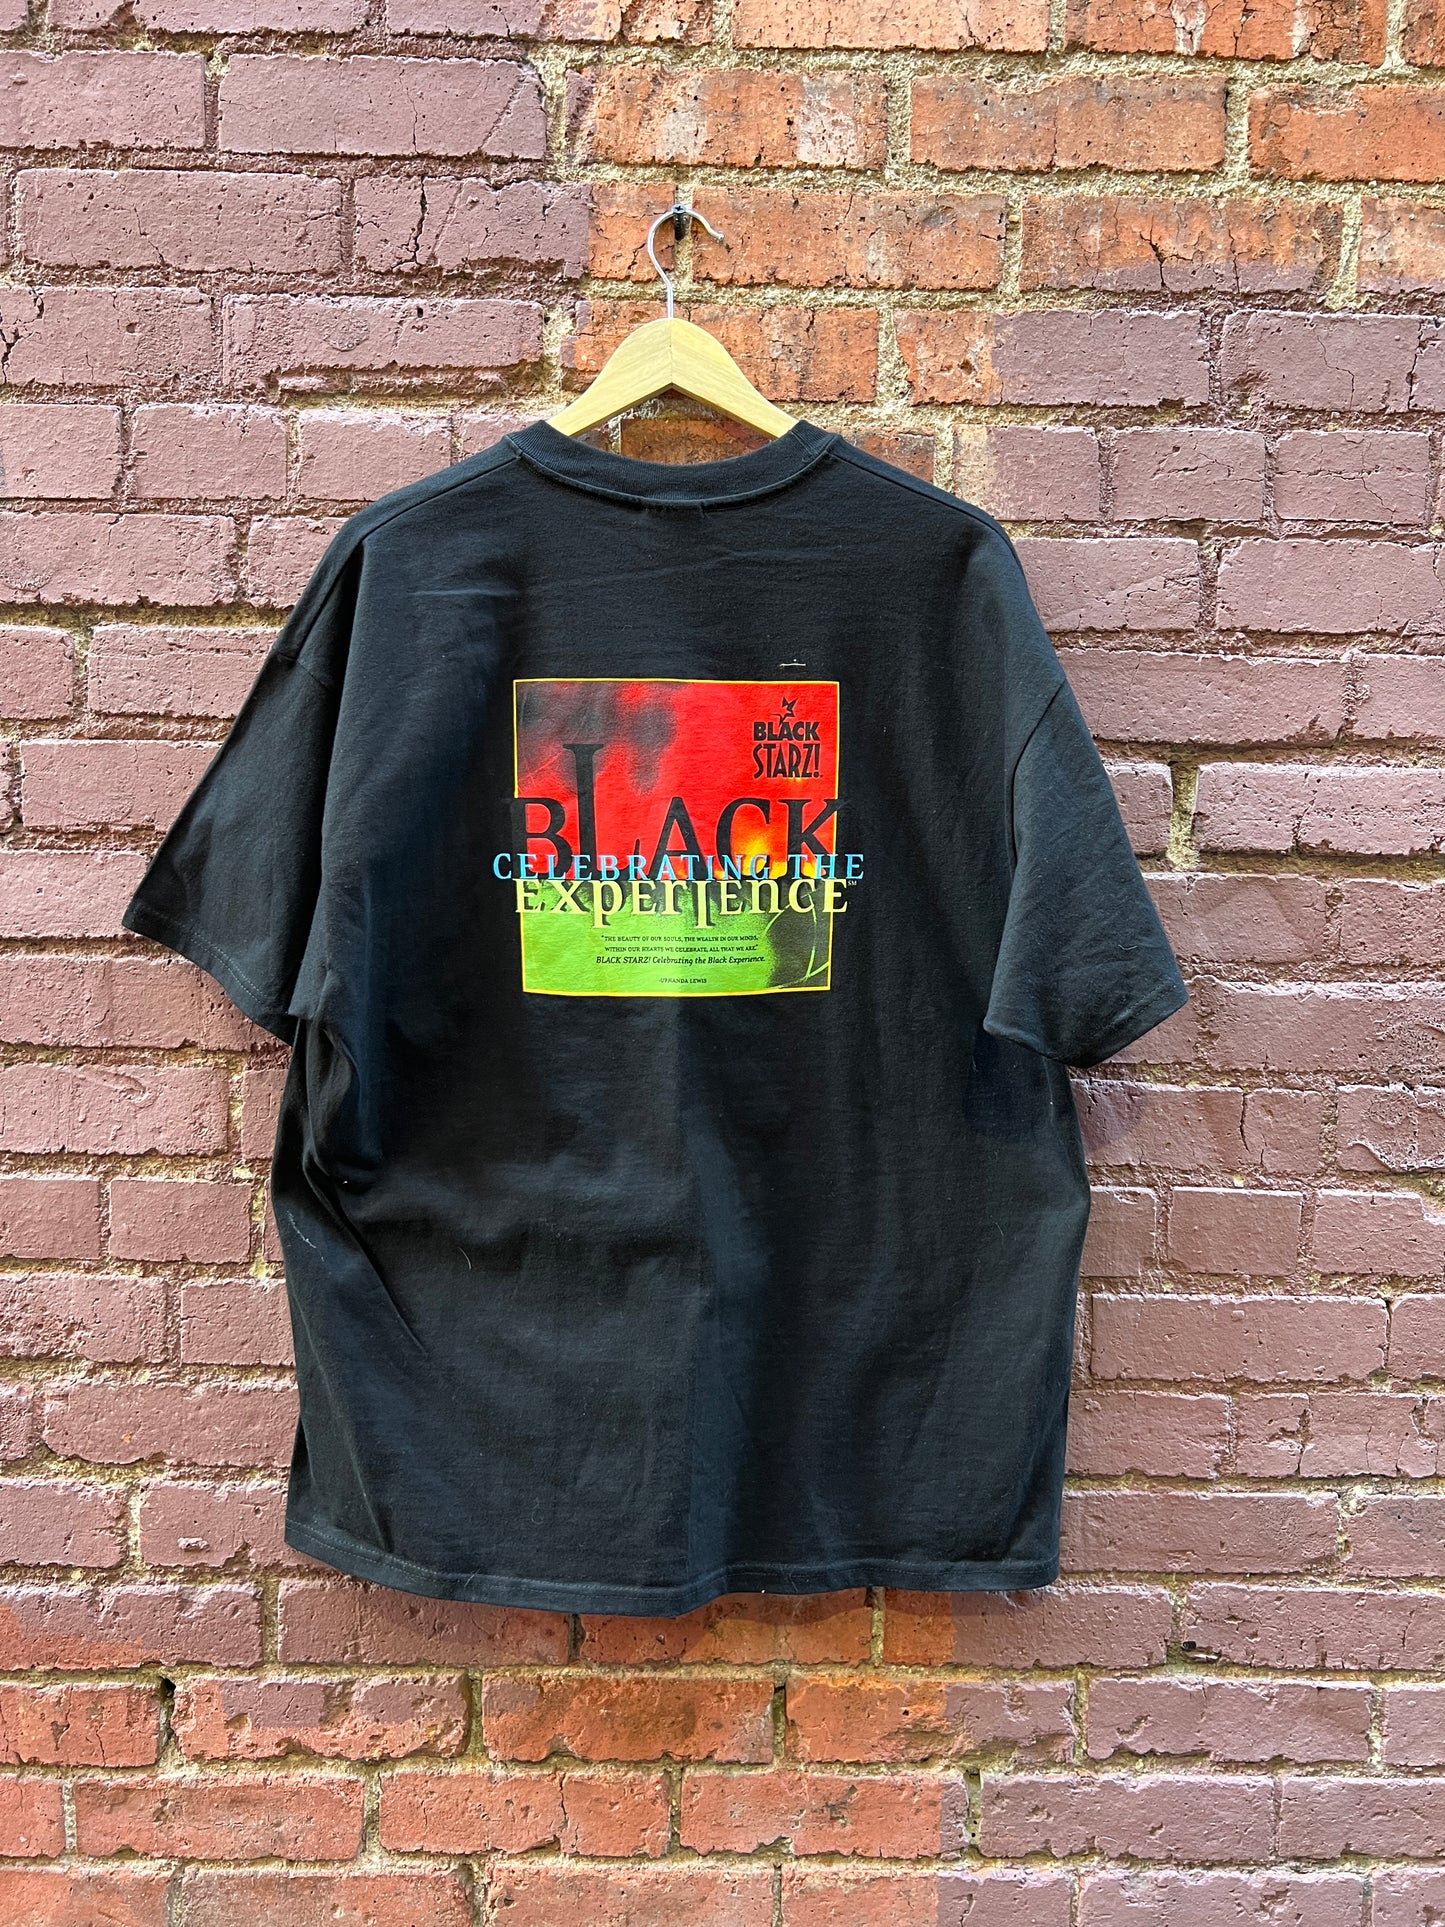 1990s STARZ! Television t-shirt - Sz XL - “Celebrating the Black Experience” tee